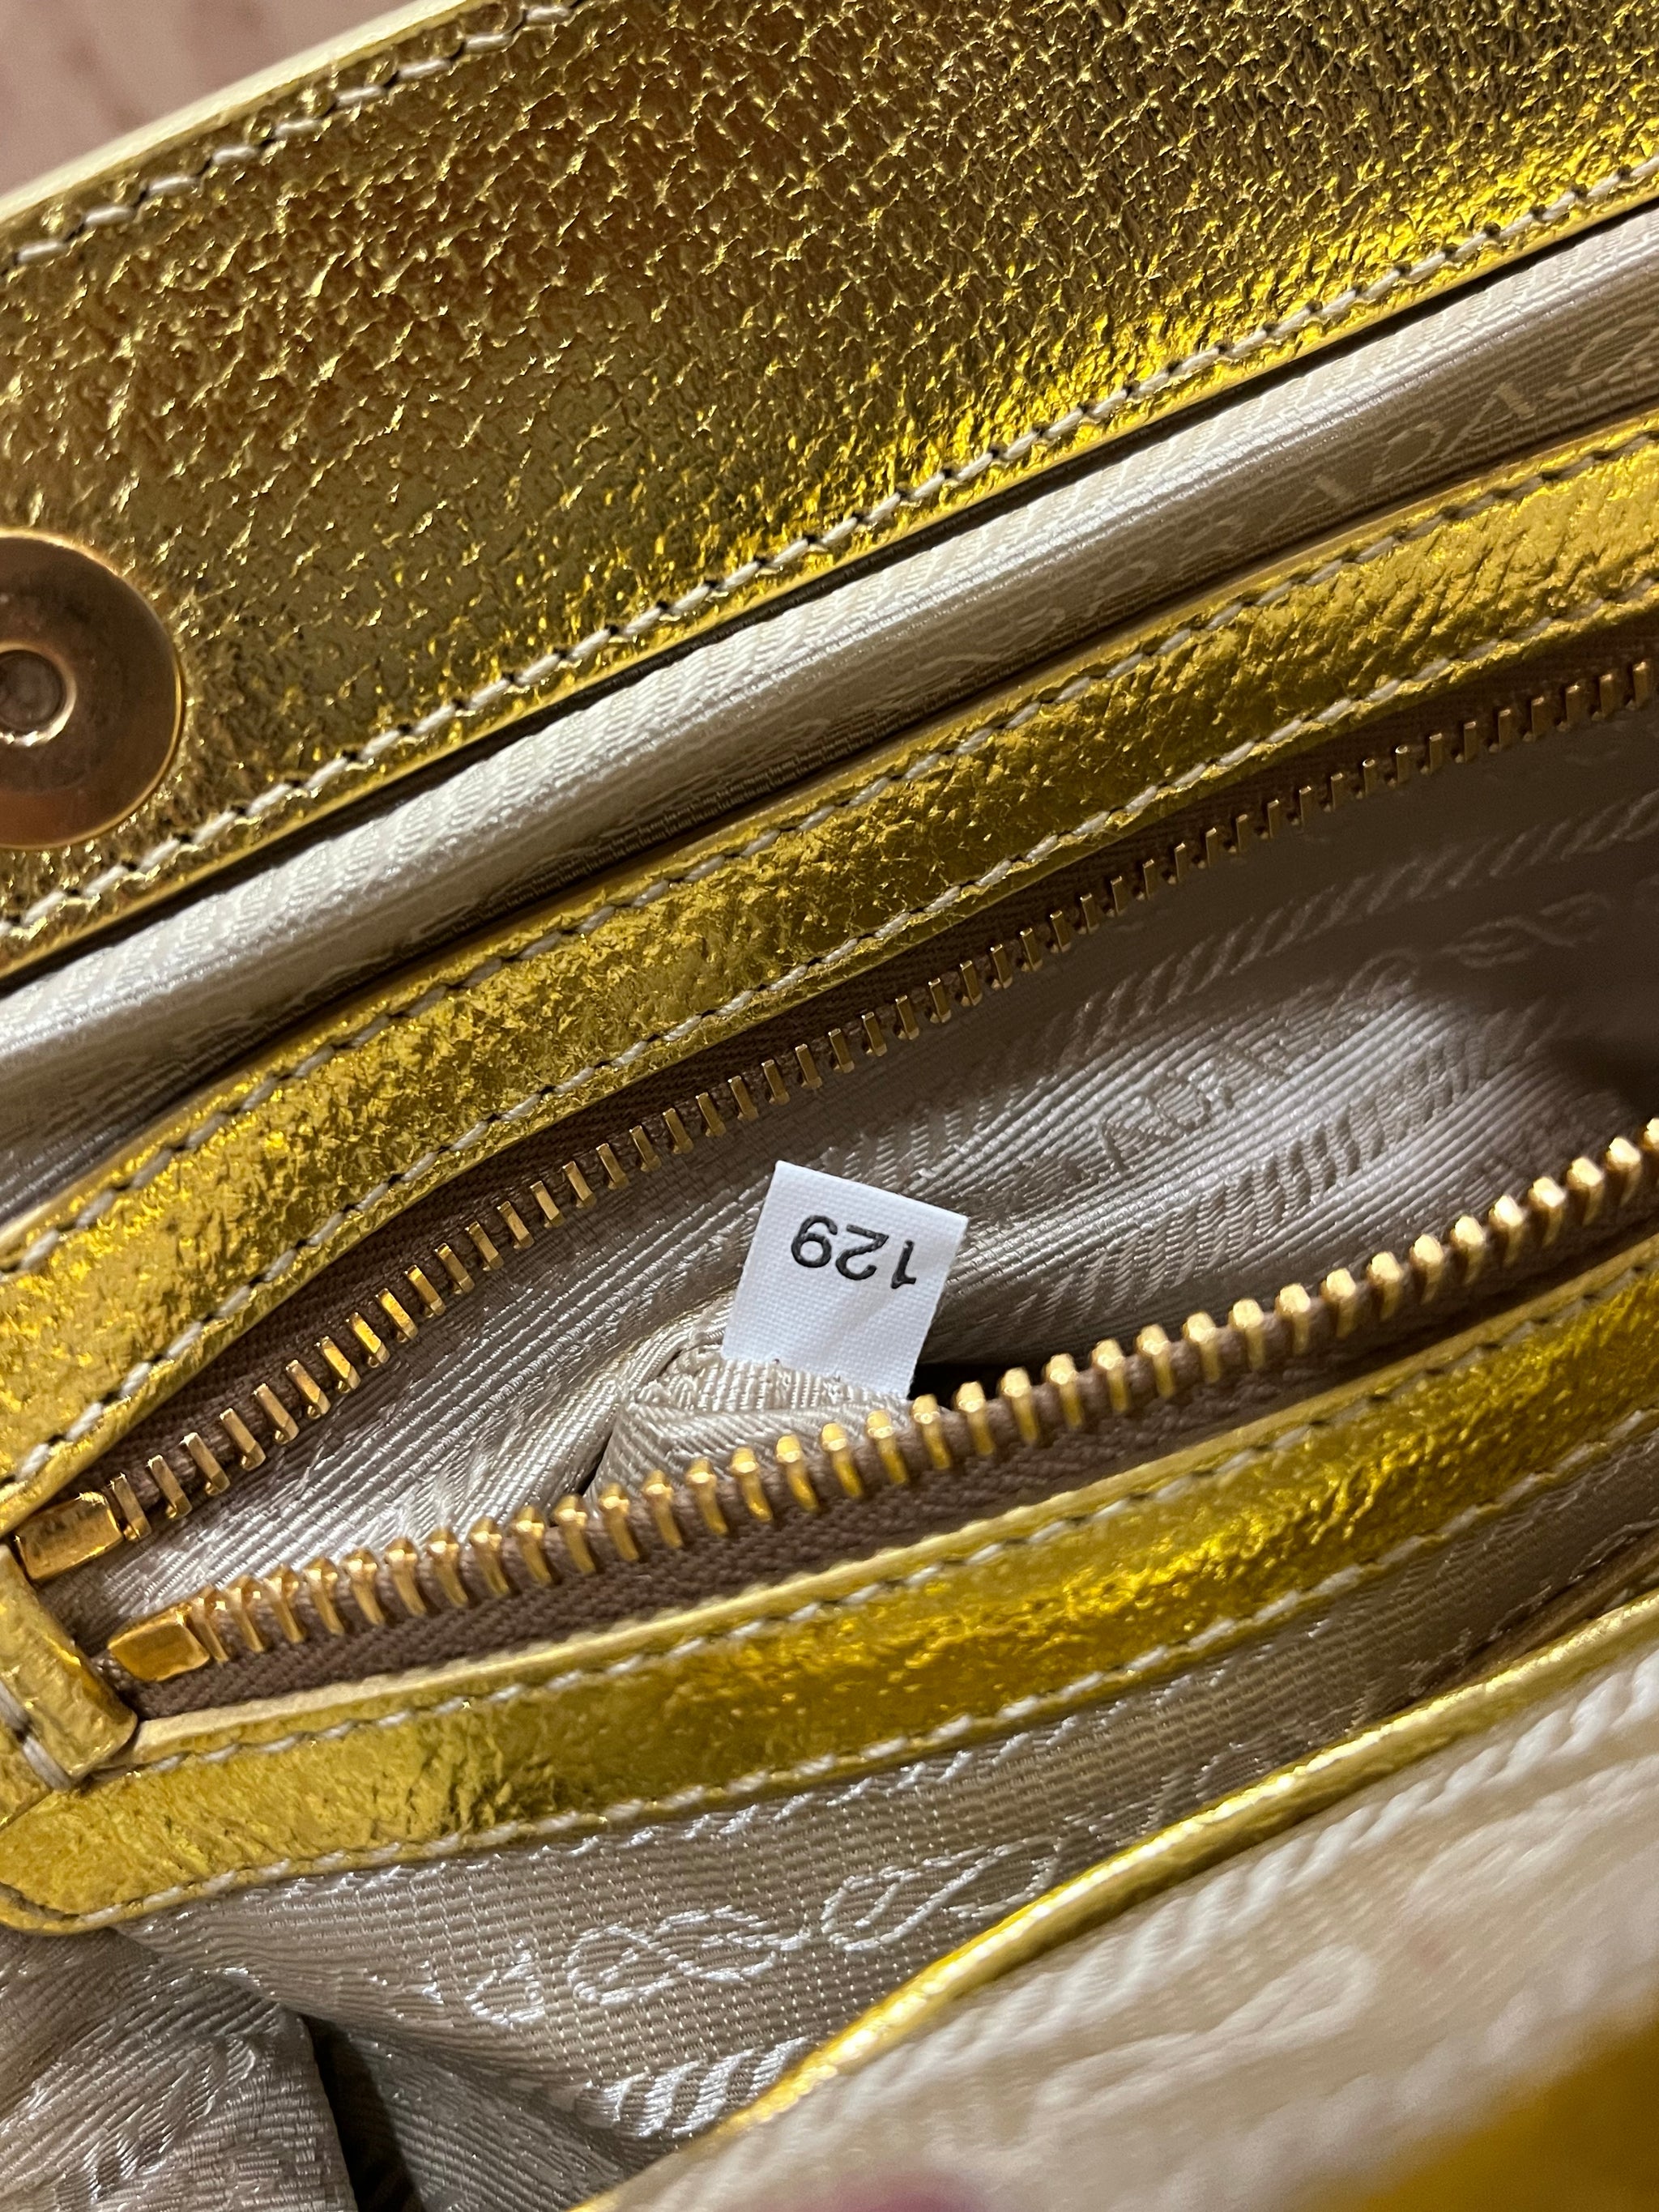 Prada Raffia Woven & Metallic Gold Leather Madras Frame Top Chain Bag